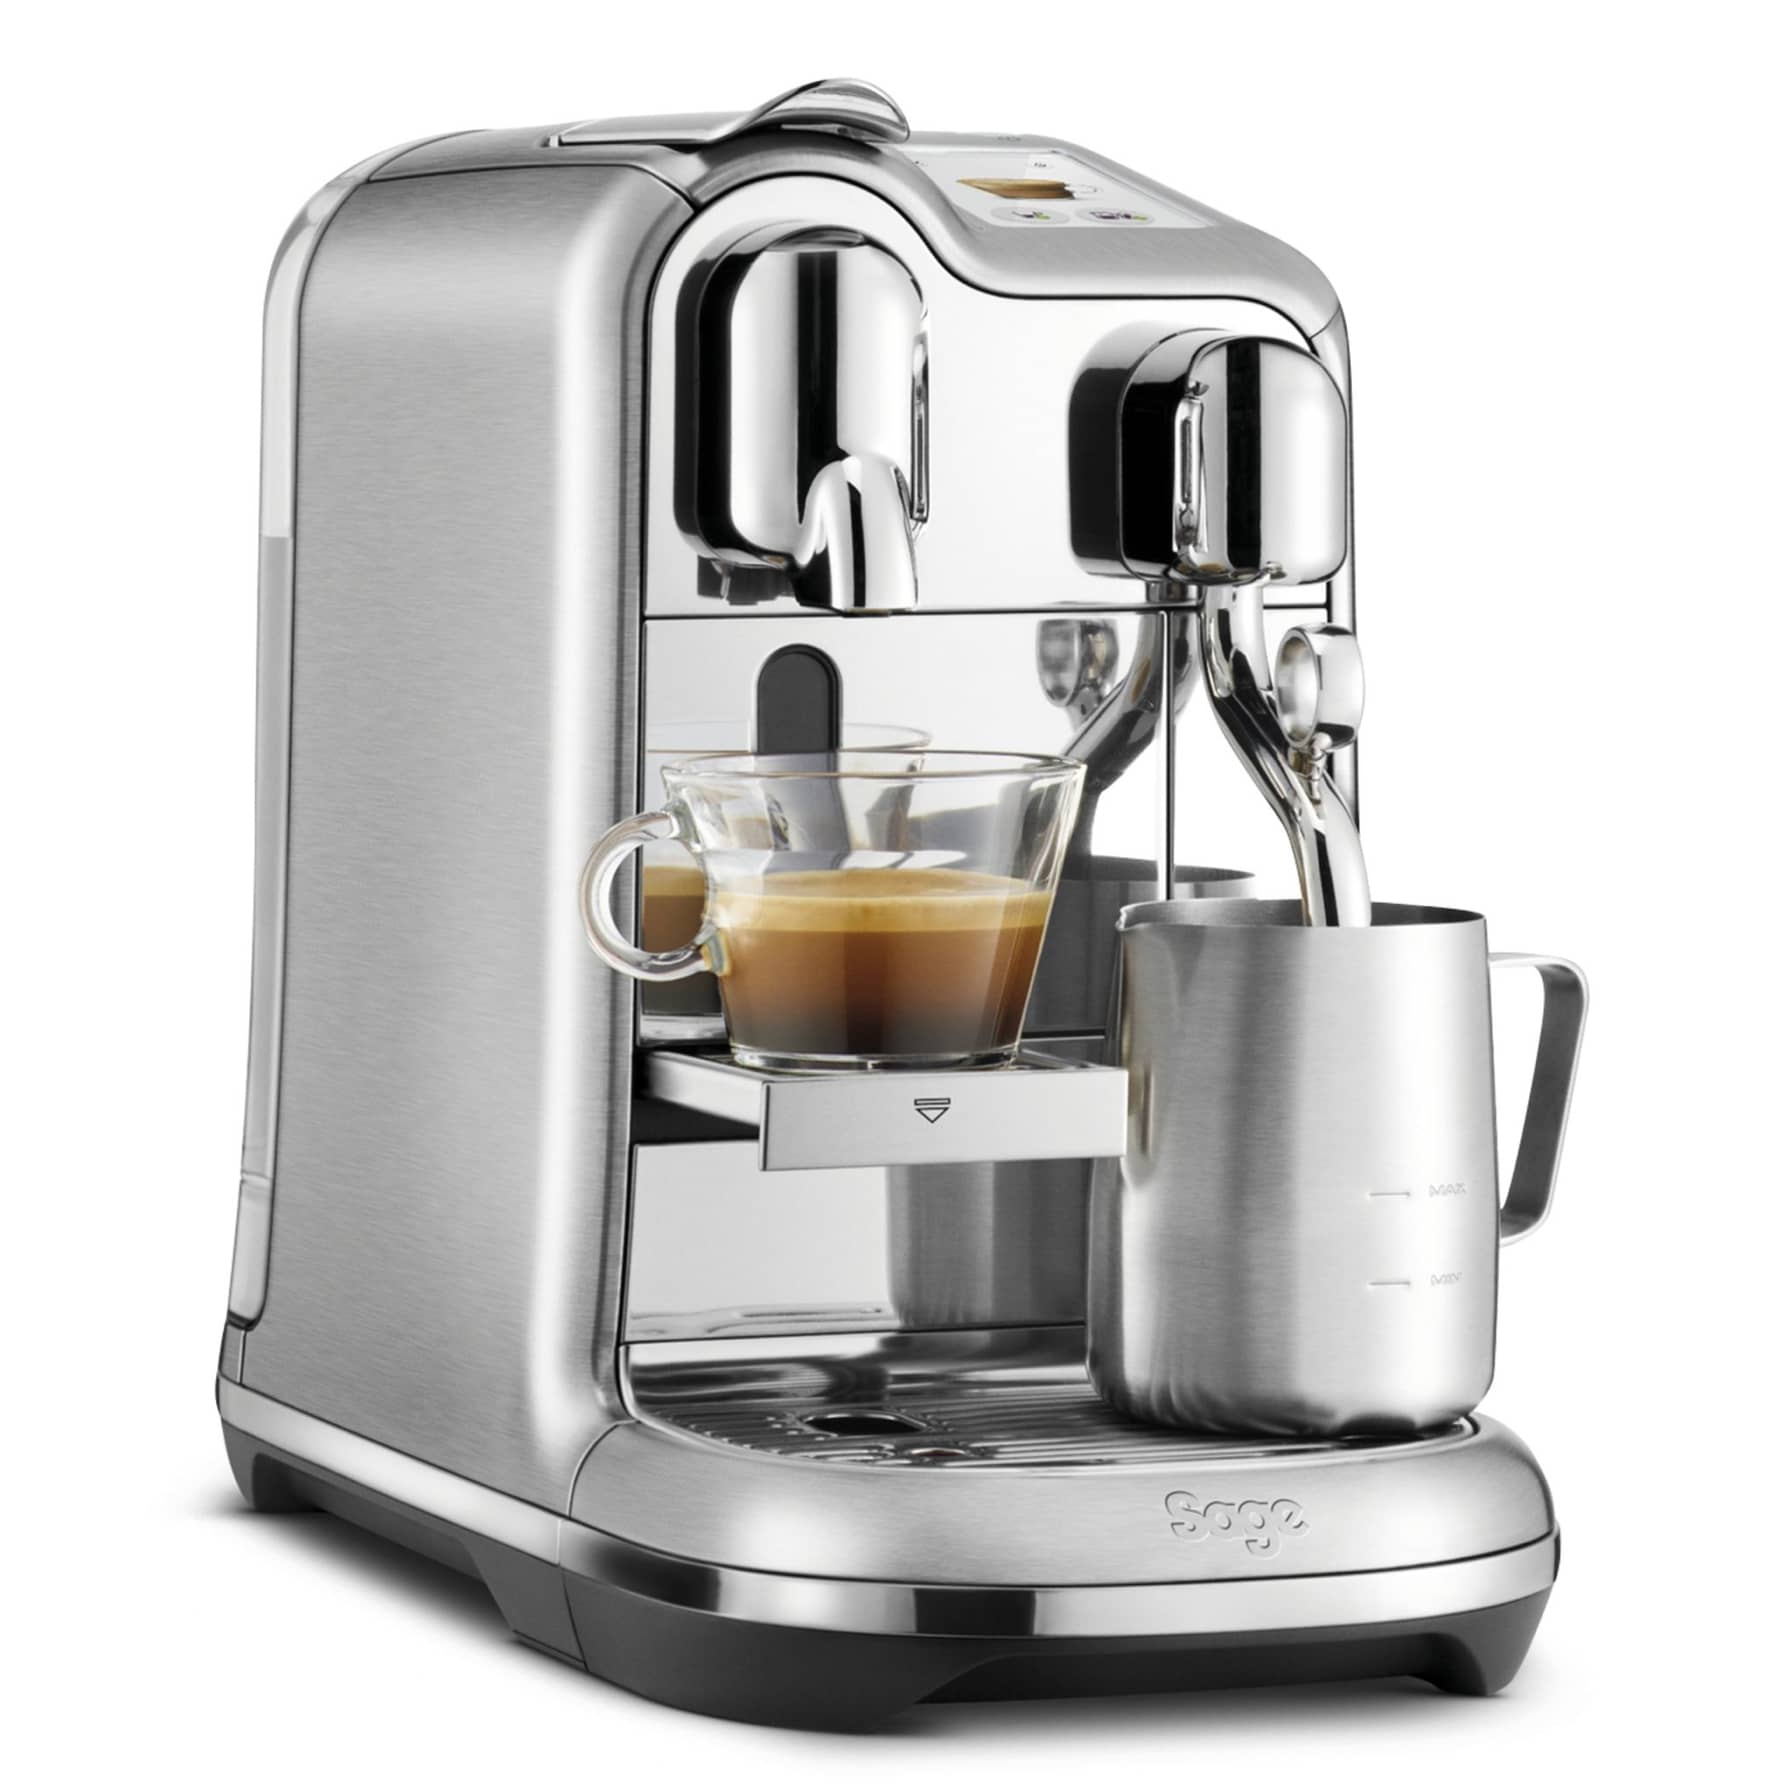 Nespresso Creatista Pro Coffee Machine